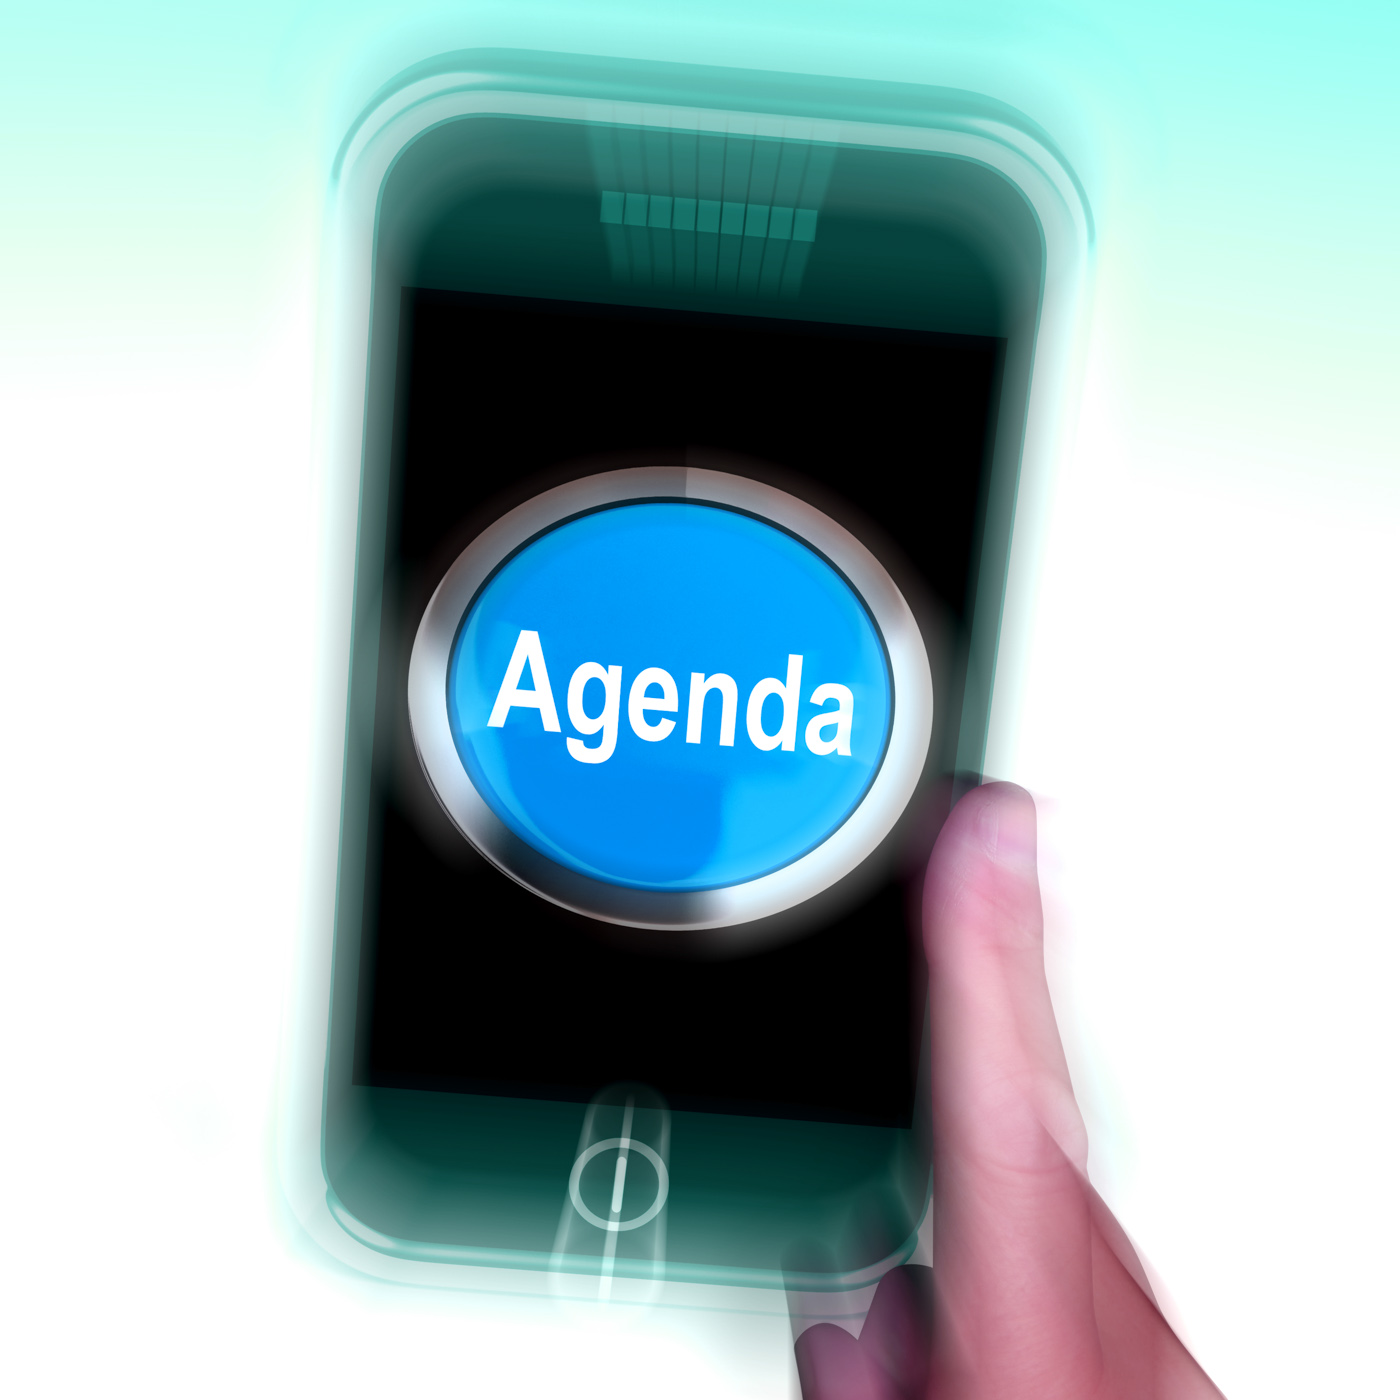 Agenda on mobile phone shows schedule program photo